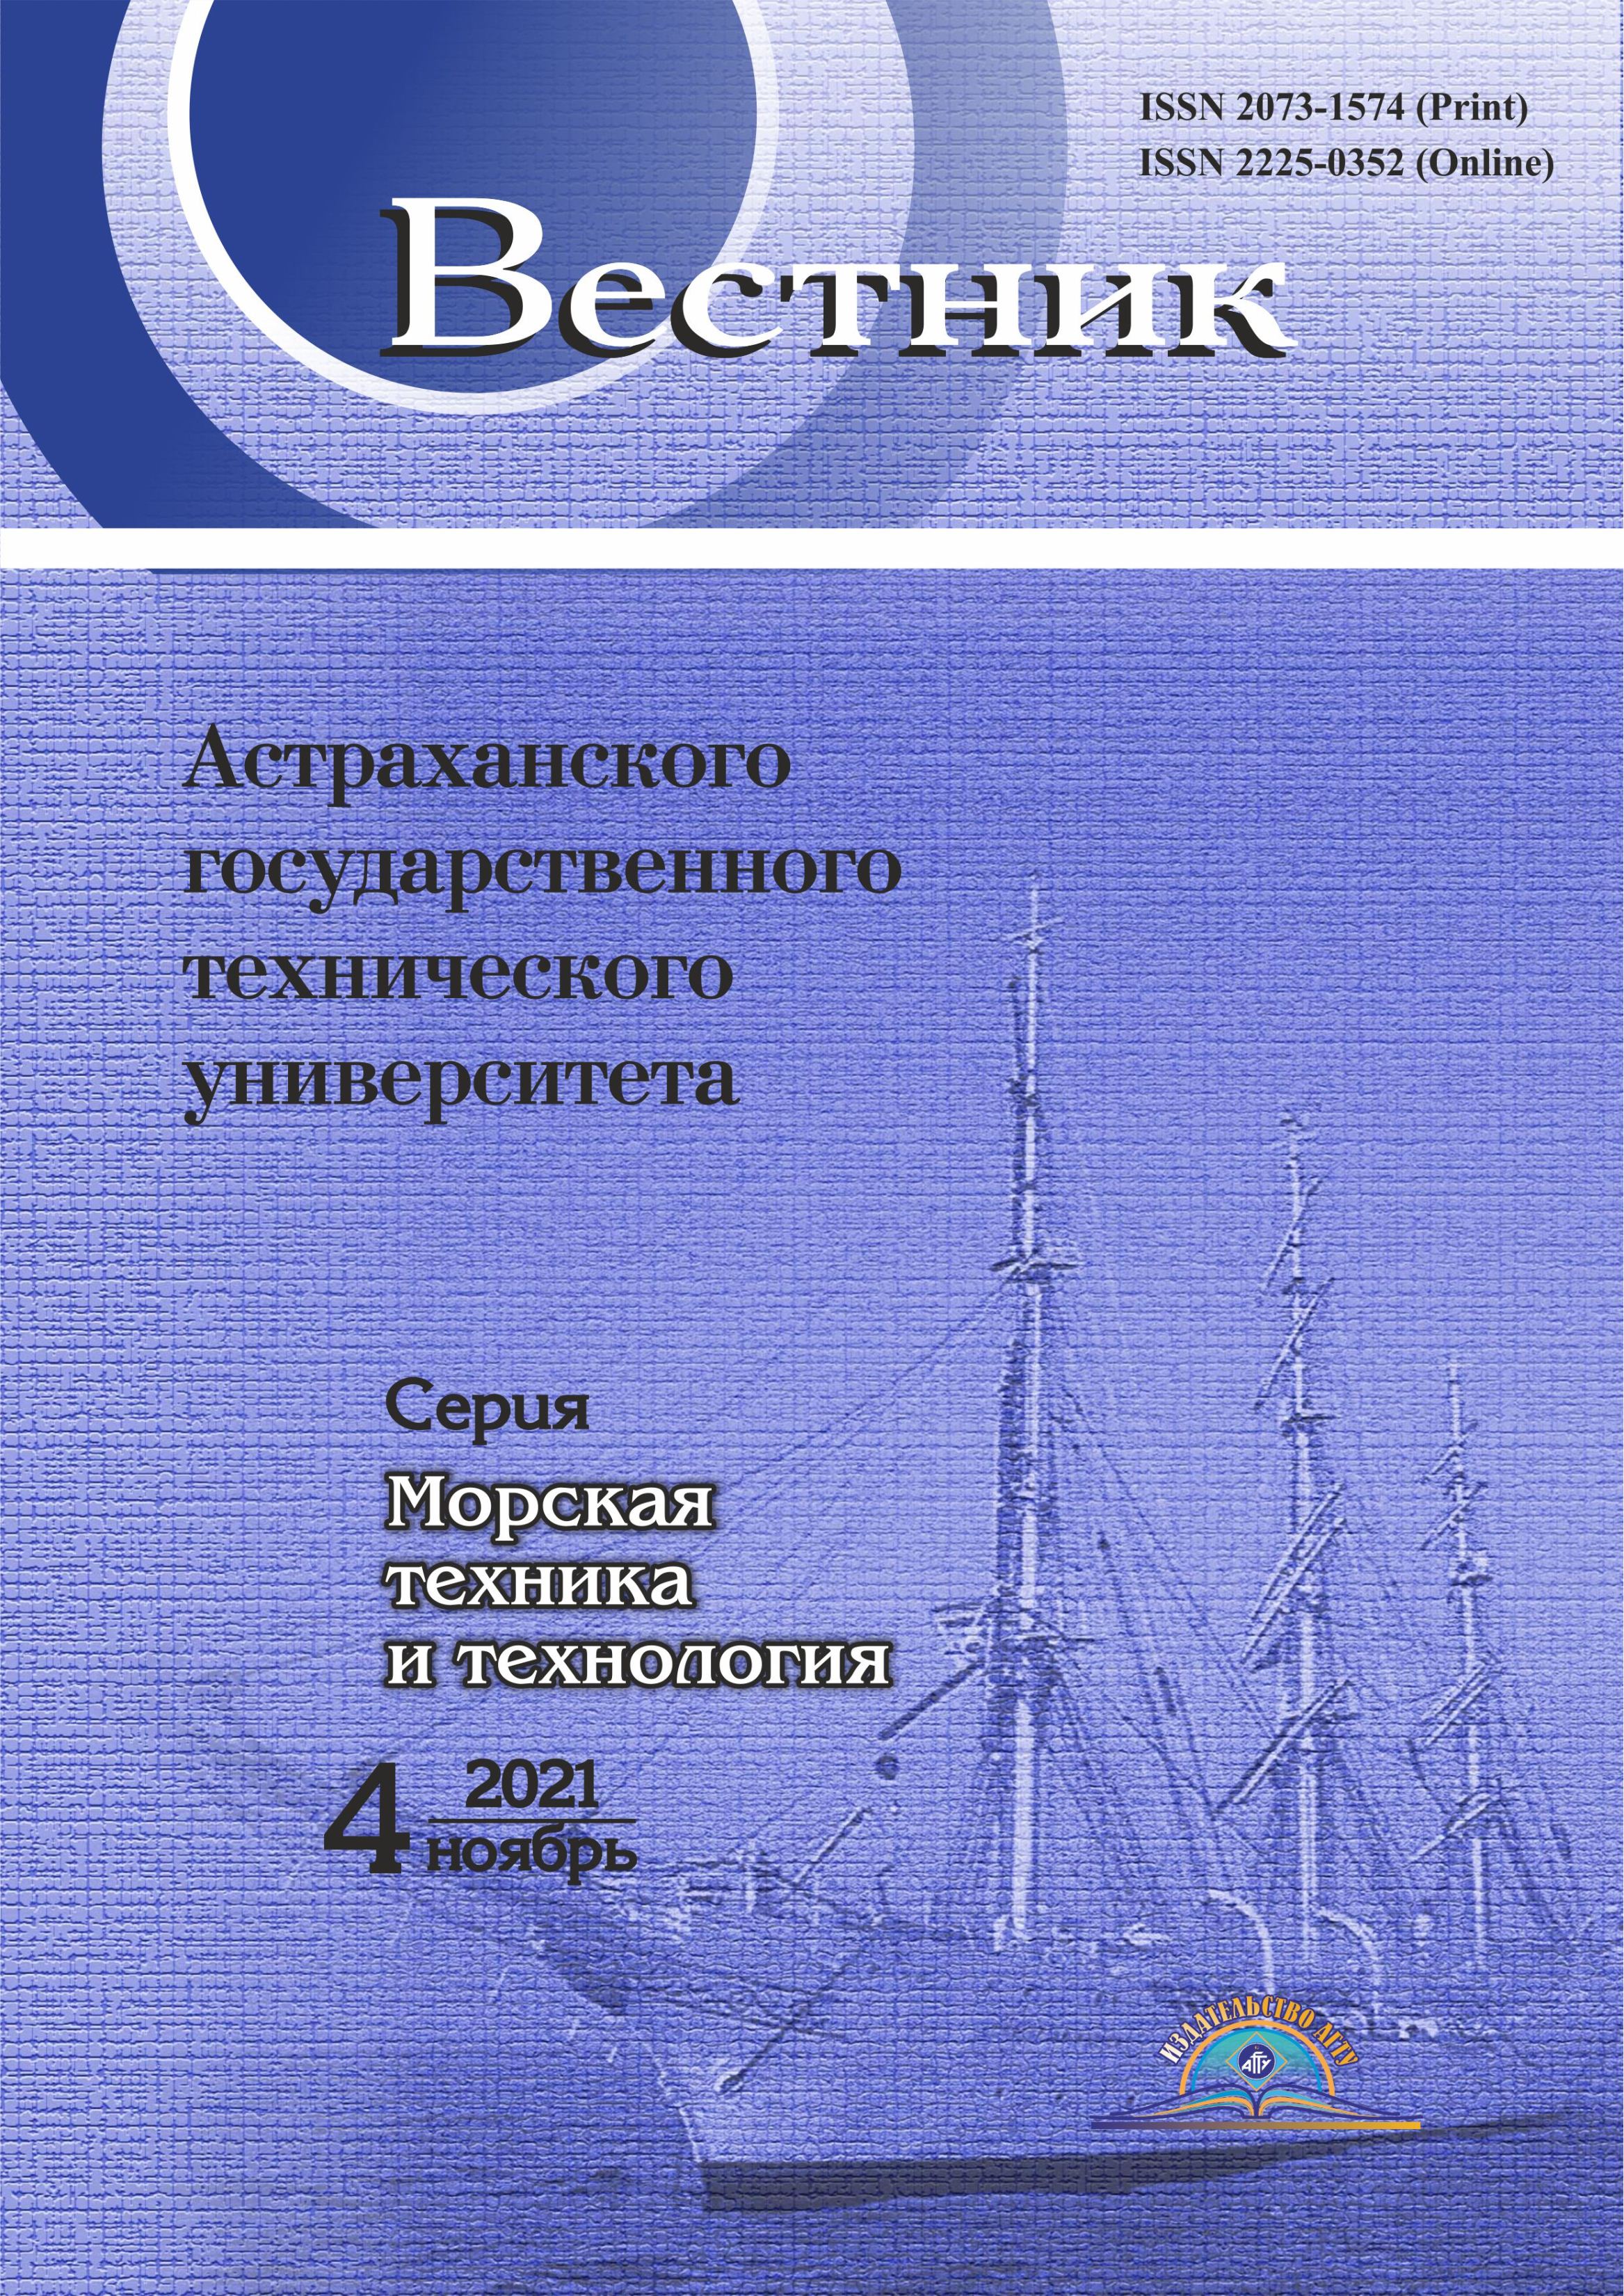                         Romanenko N. G. Increasing efficiency of ship cables defectation
            